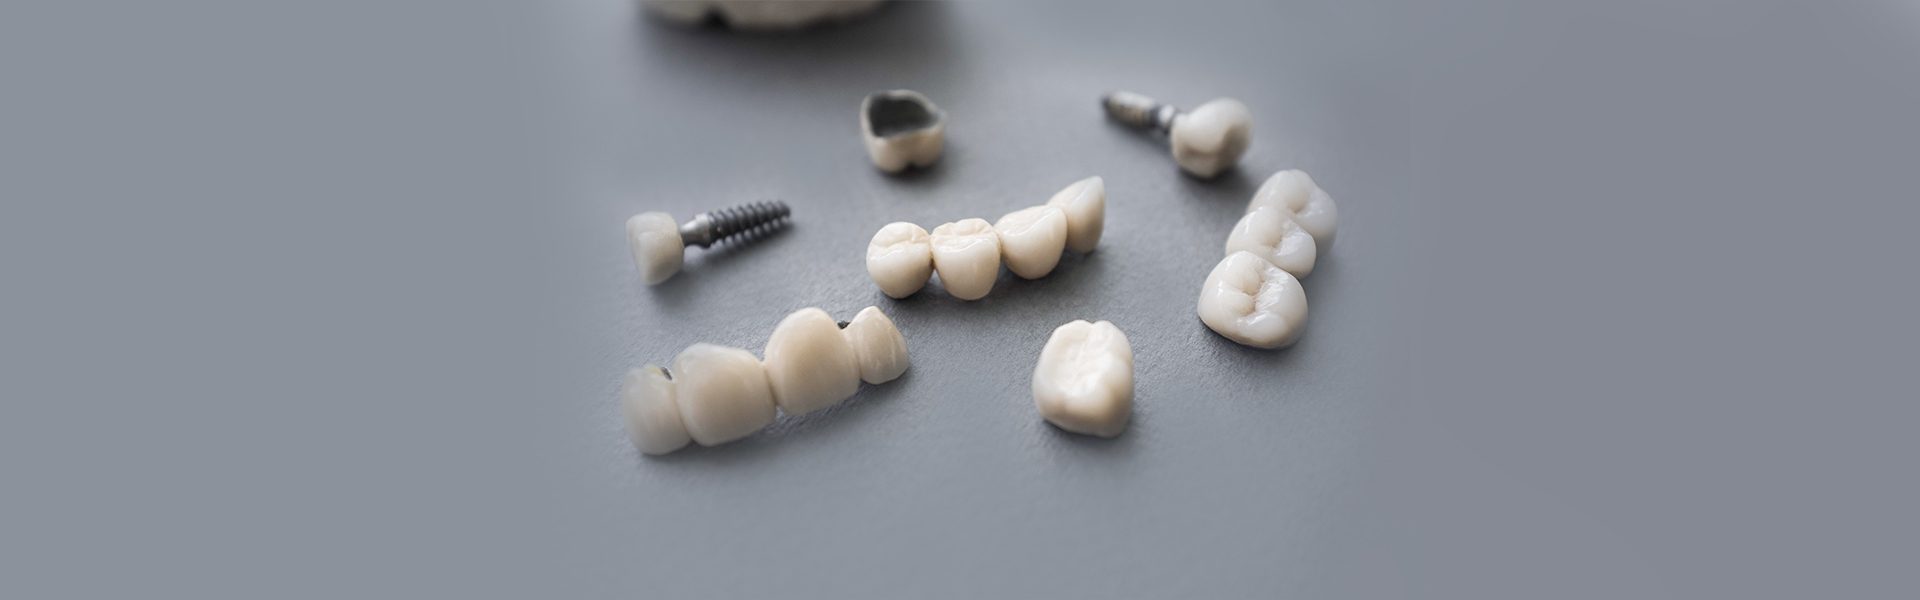 Dental Crowns Vs. Dental Filling: Which is Better?